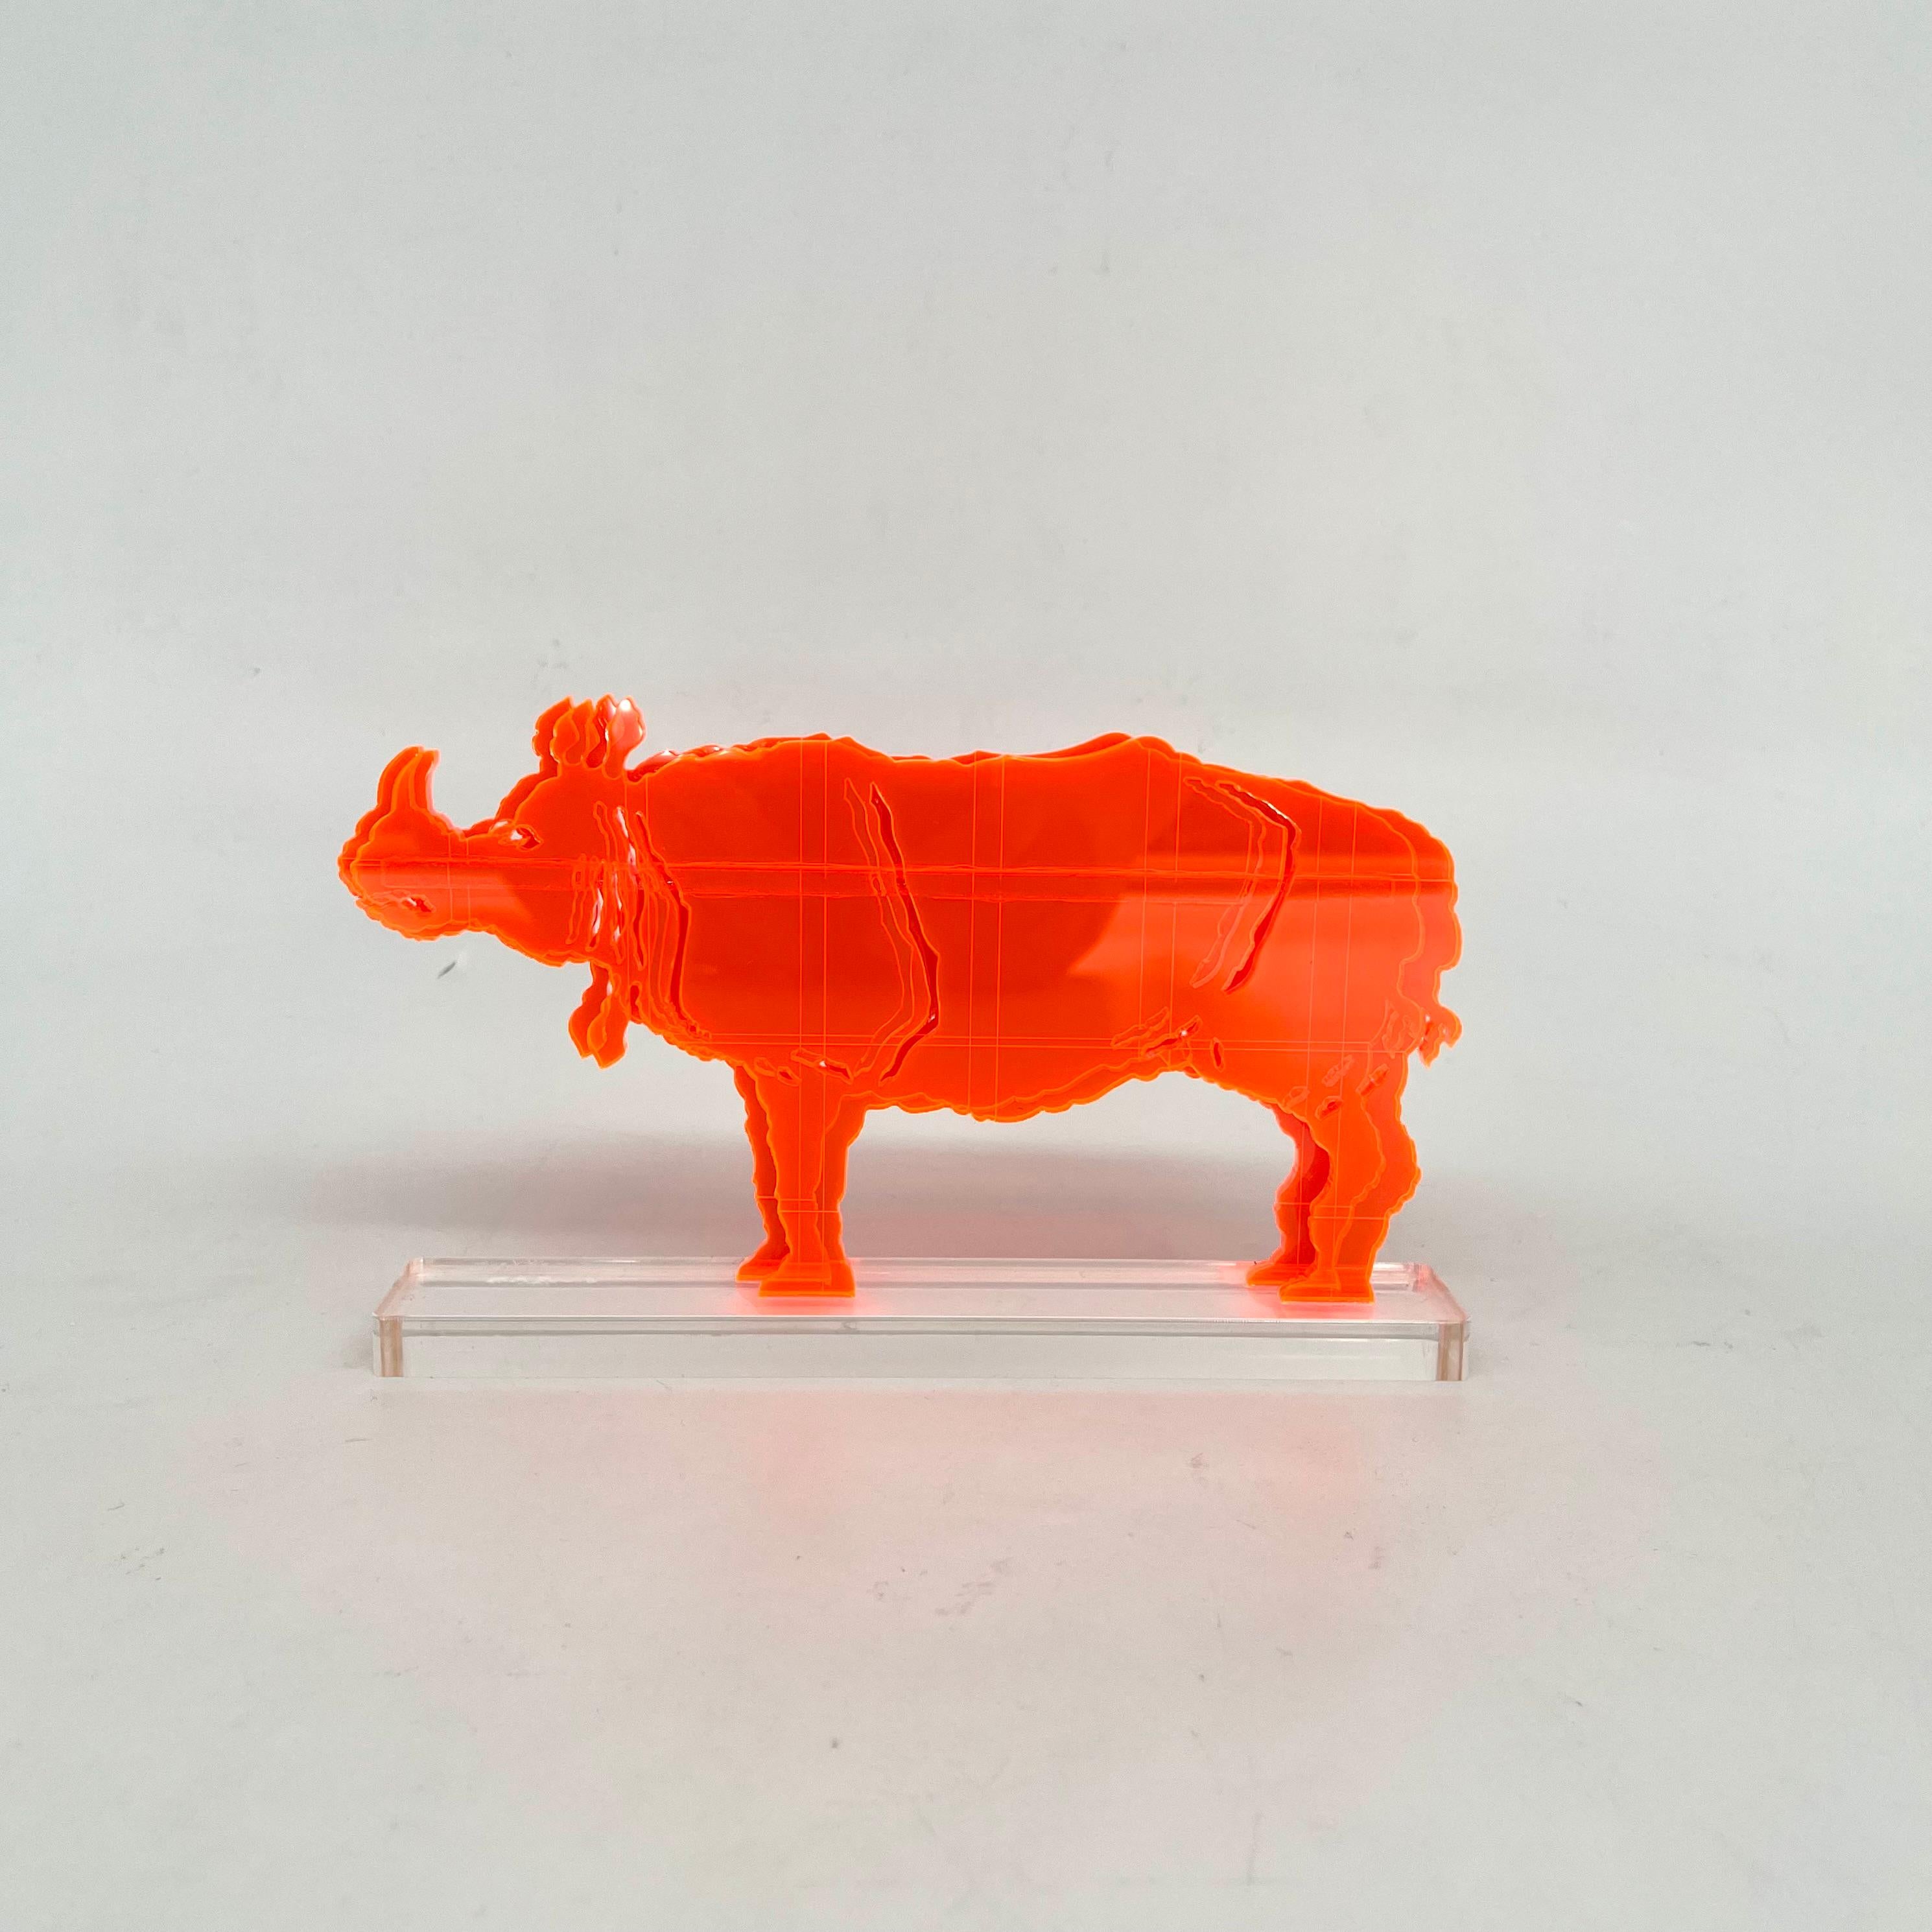 Gino MAROTTA (1935-2012)
Rinoceronte artificiale, 2010
Edition Artbeat arrêtée
Skulptur, mehrere aus orangefarbenem Méthacrylat und dekoriert. Signé sur la base. Dans sa boite d'origine. 
Haut. : 11 cm Länge : 18,5 cm

Gino MAROTTA